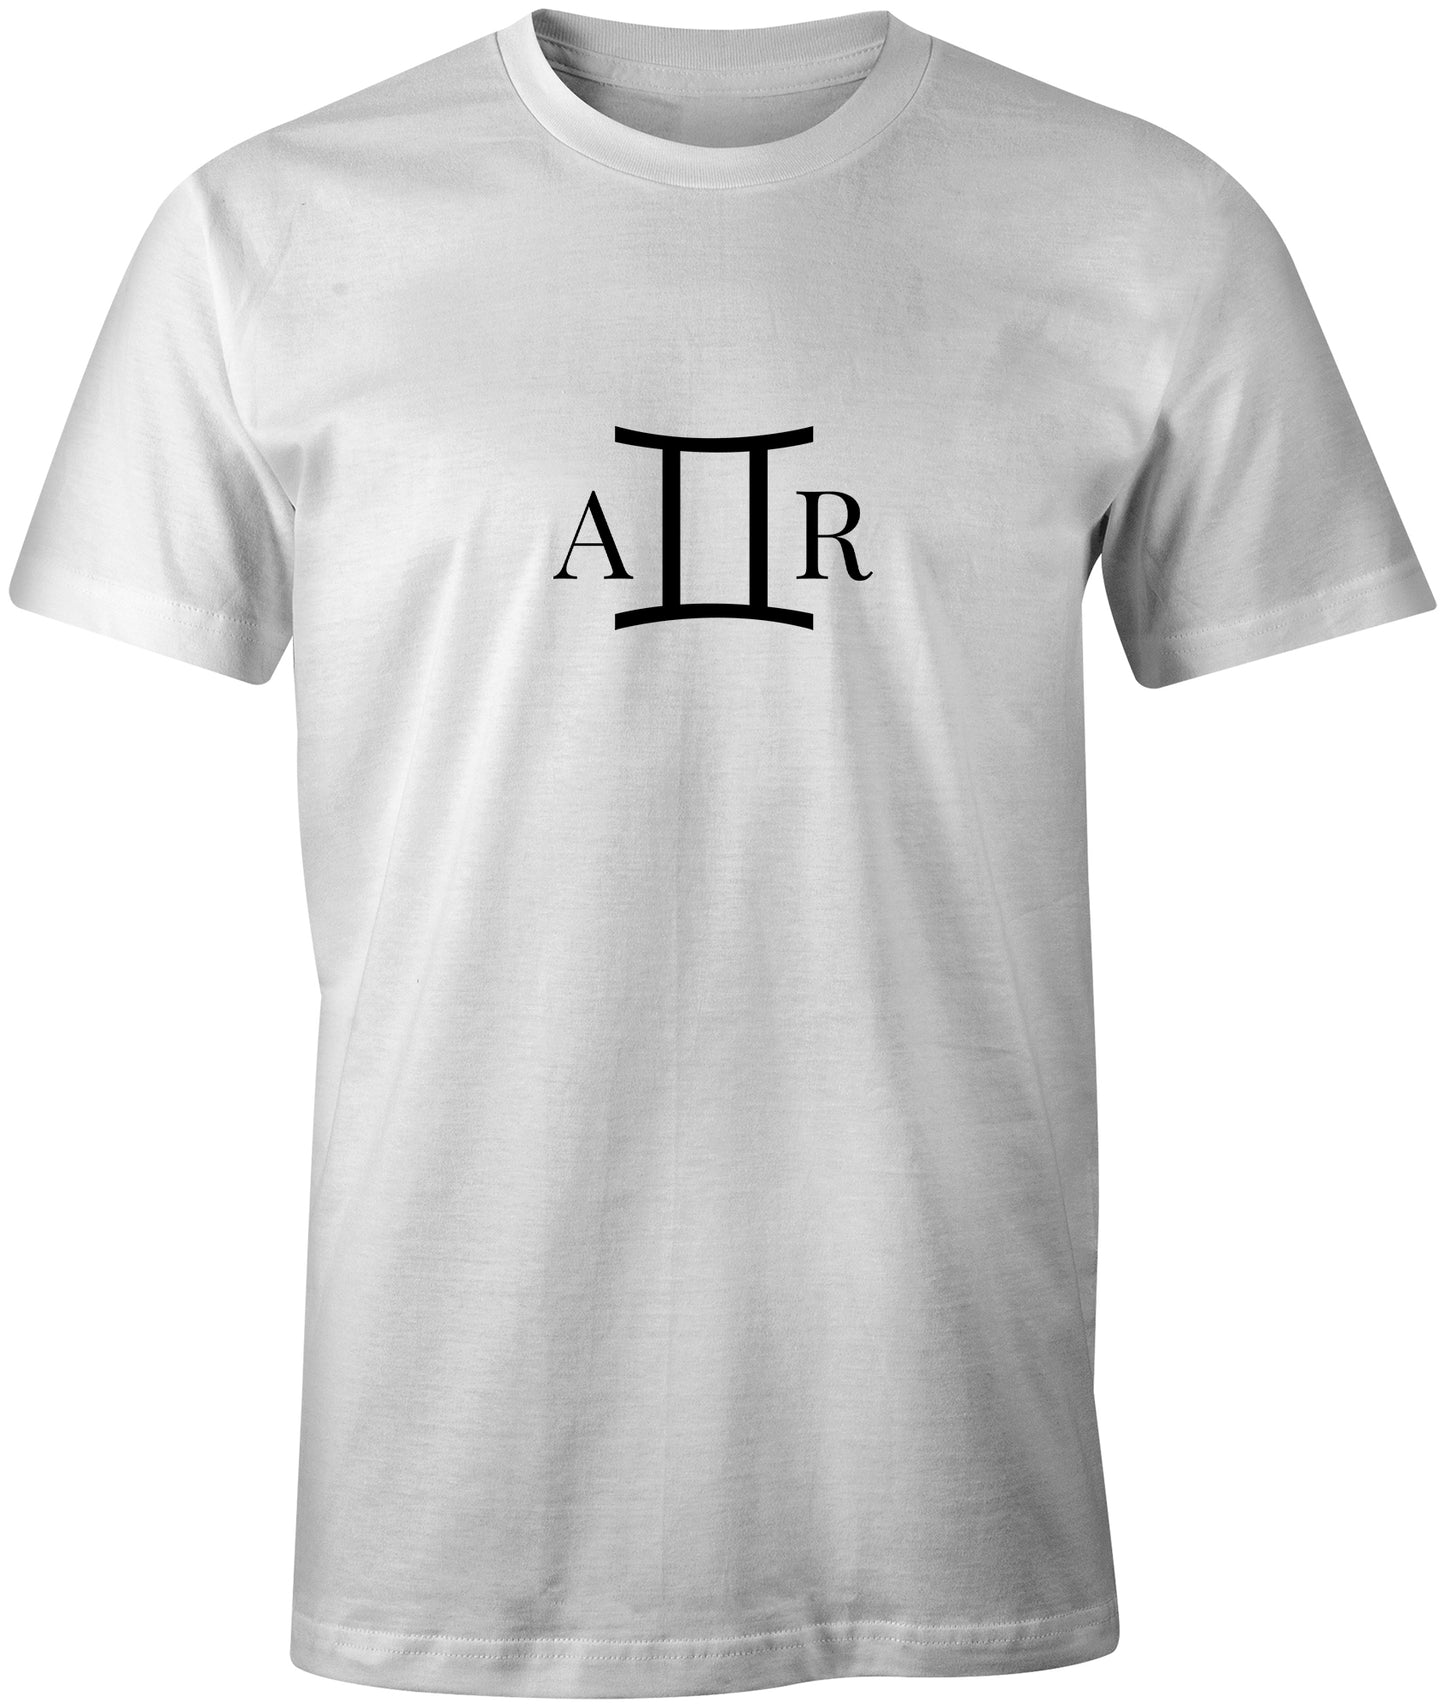 The AR Brand White T-Shirt